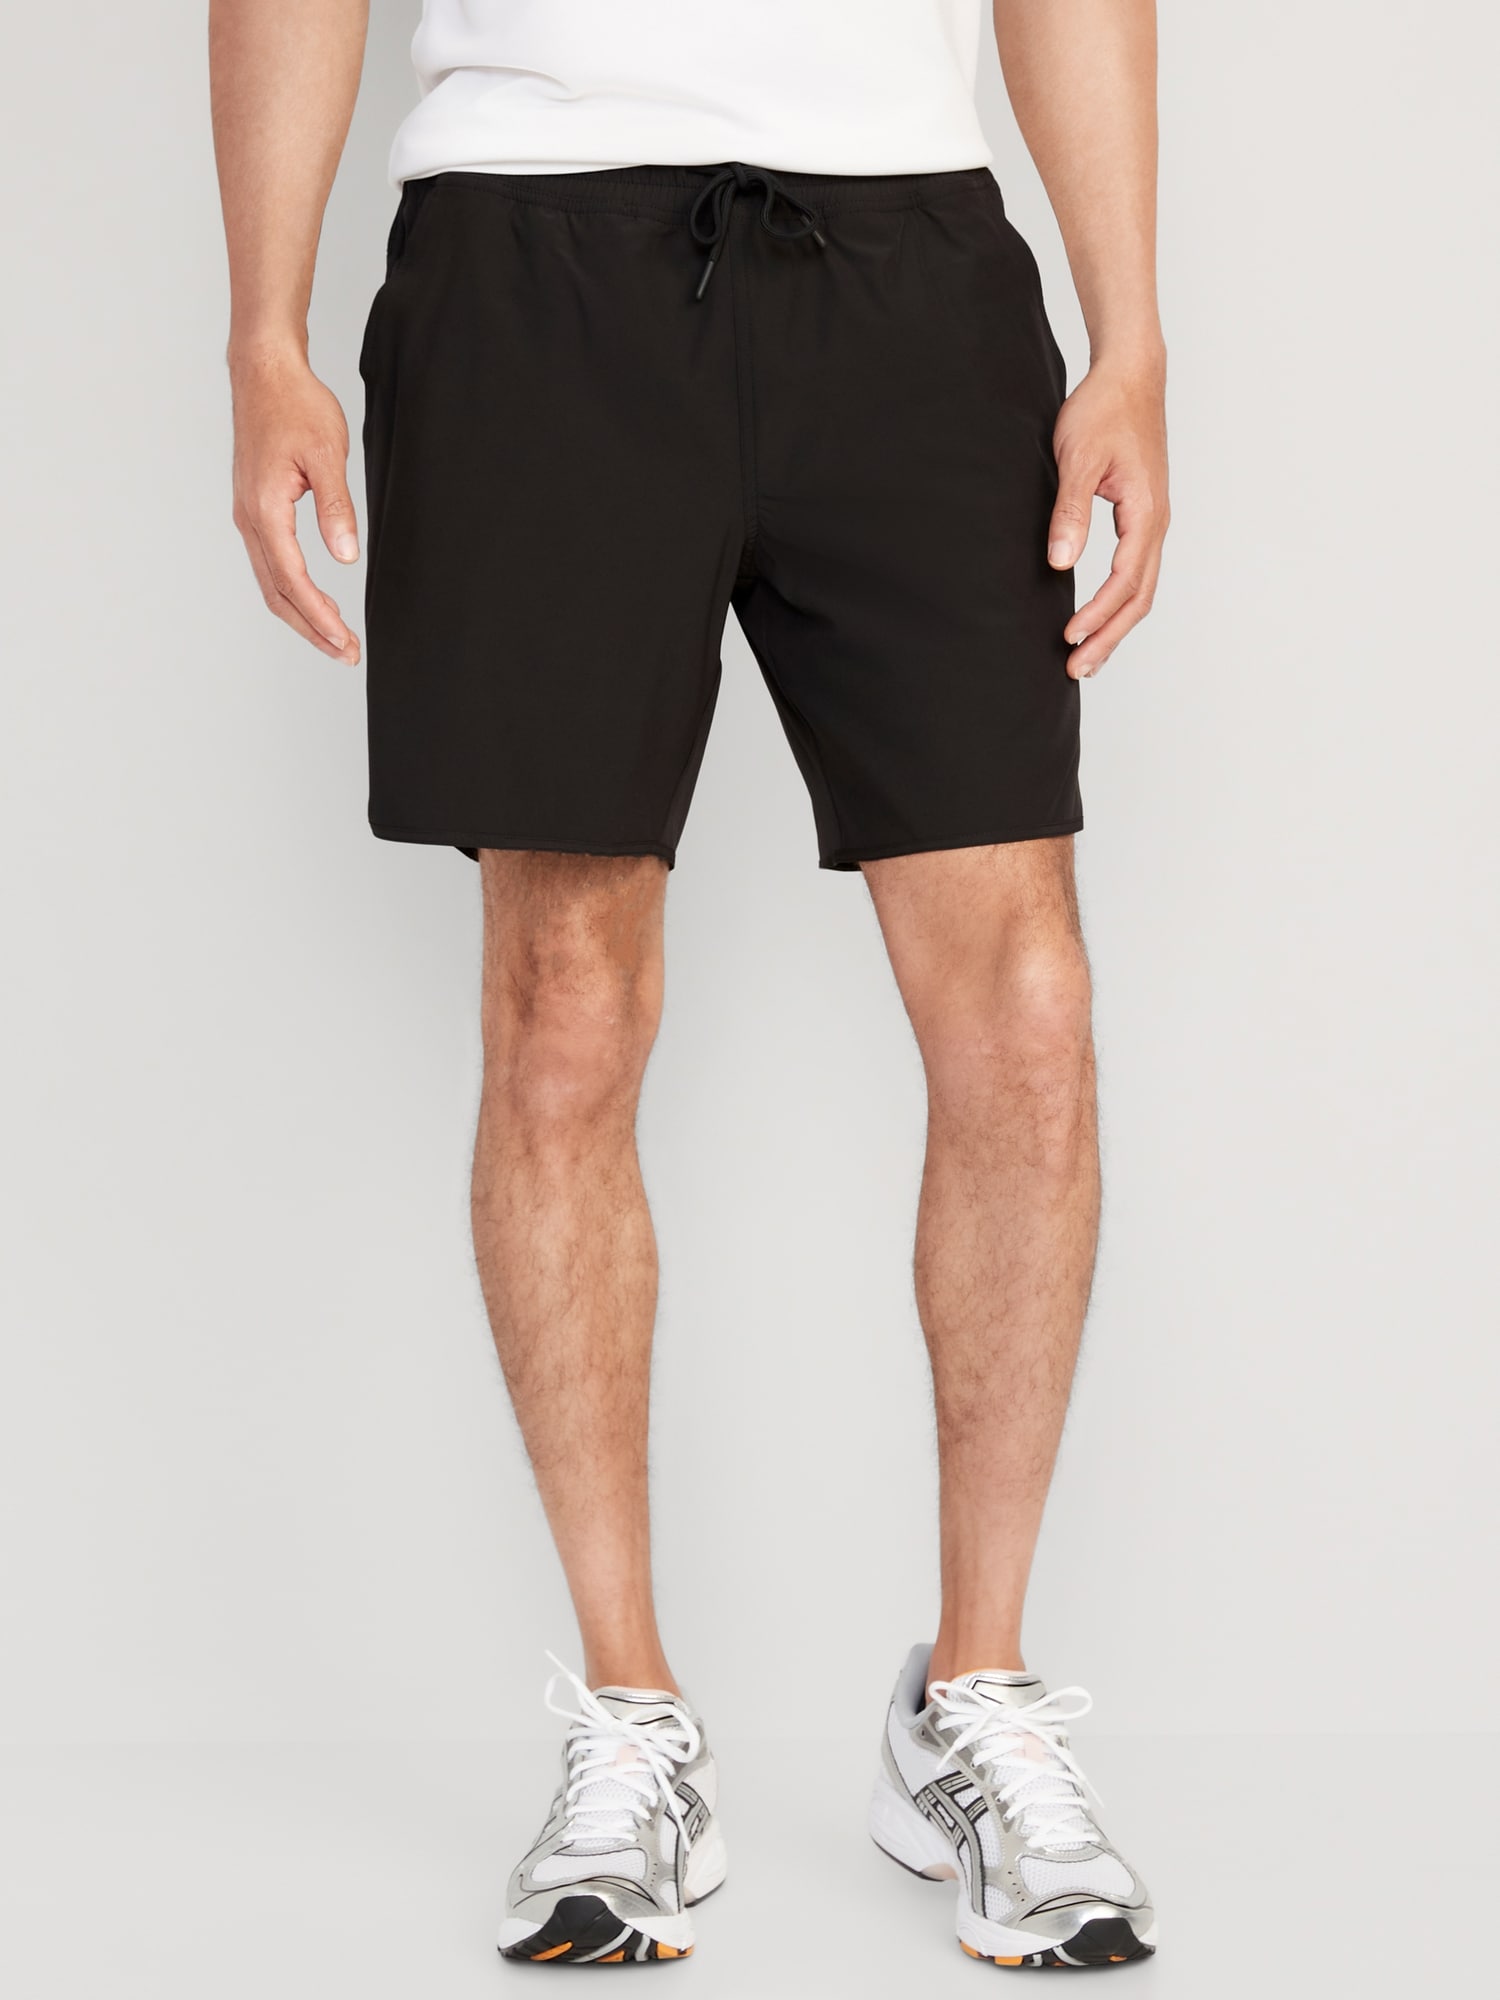 StretchTech Rec Swim-to-Street Shorts -- 7-inch inseam